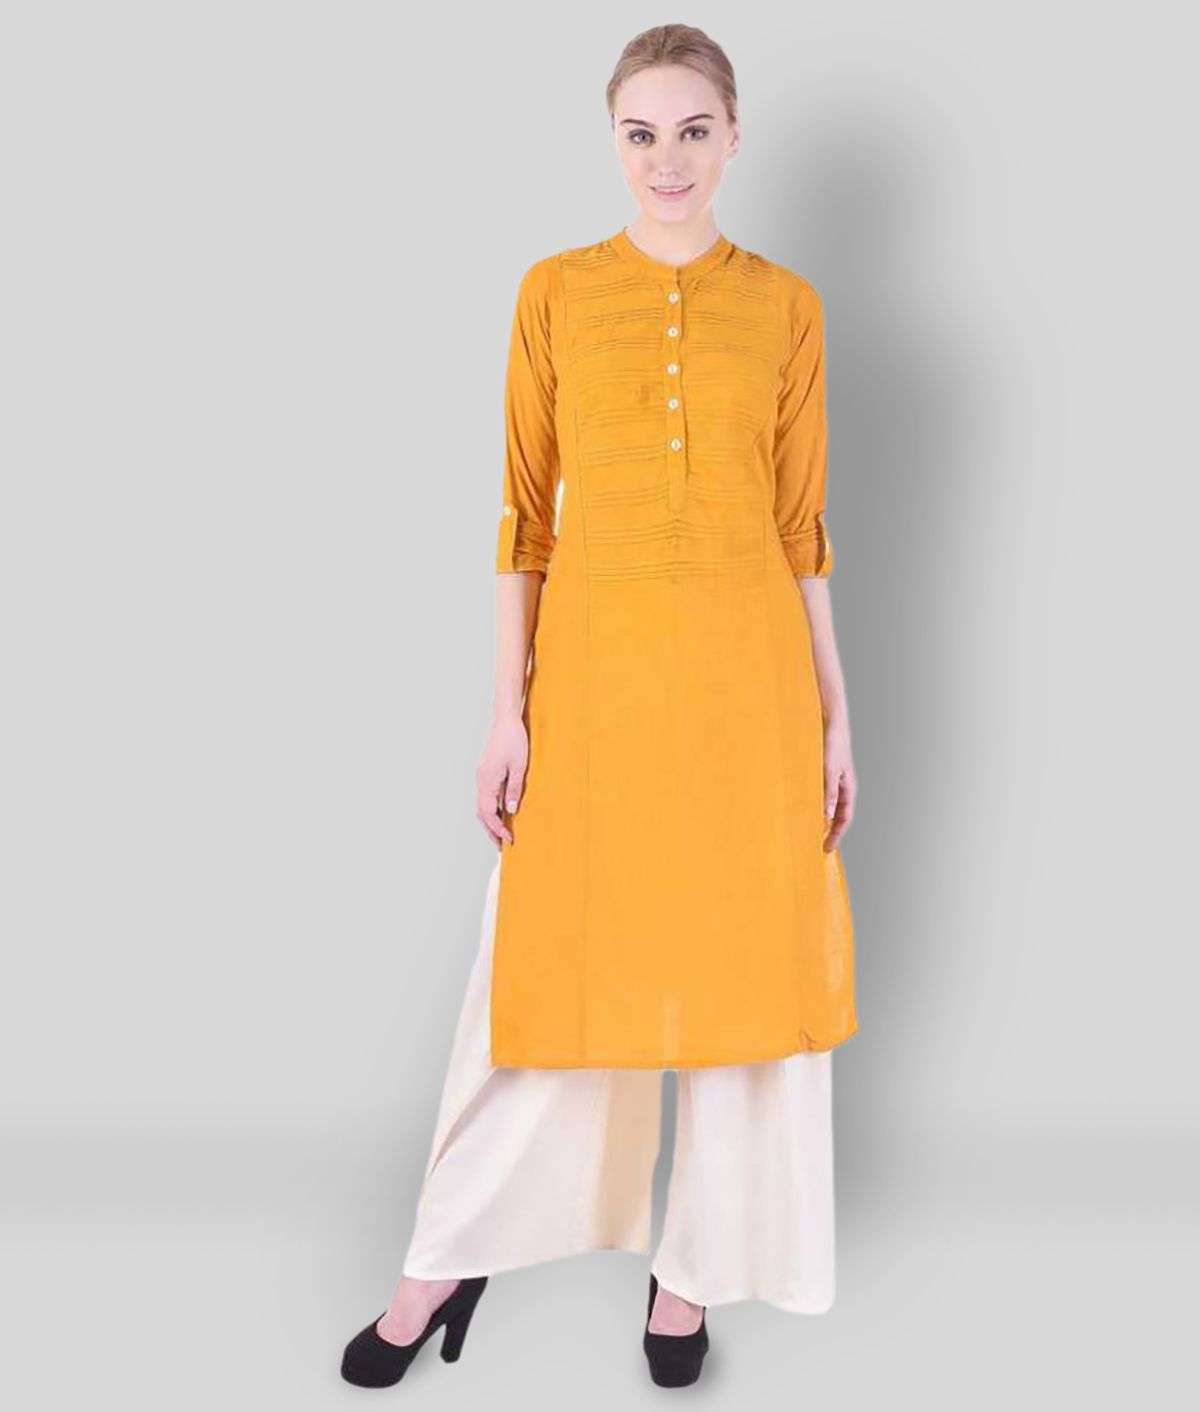     			SVARCHI - Yellow Cotton Blend Women's Straight Kurti